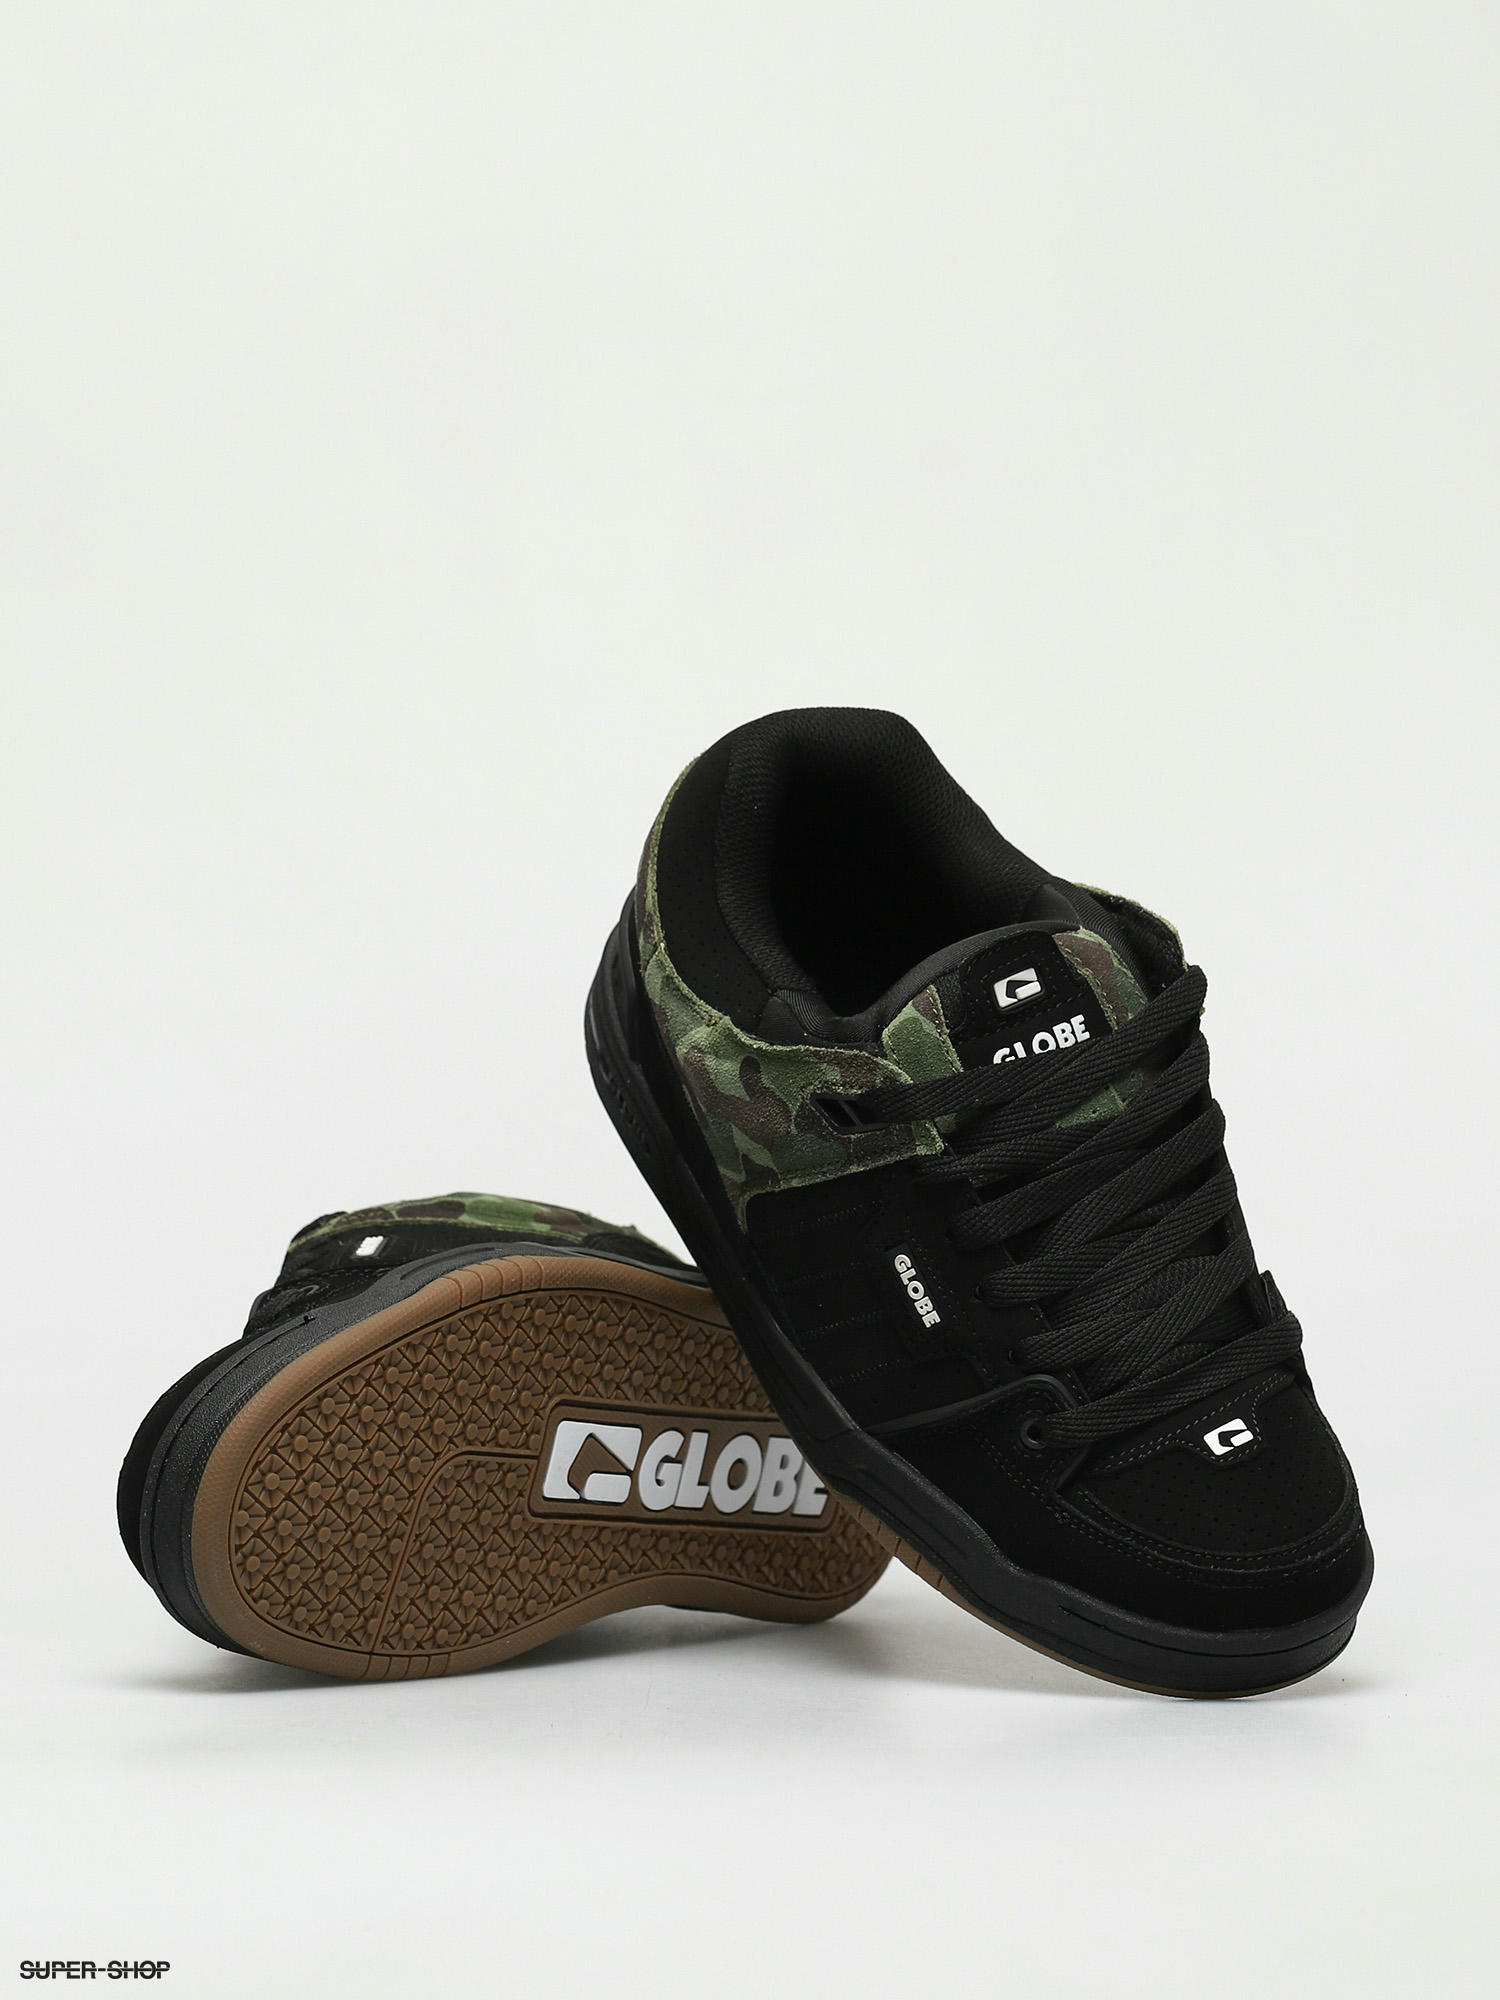 Globe Fusion Shoes (black/green camo)